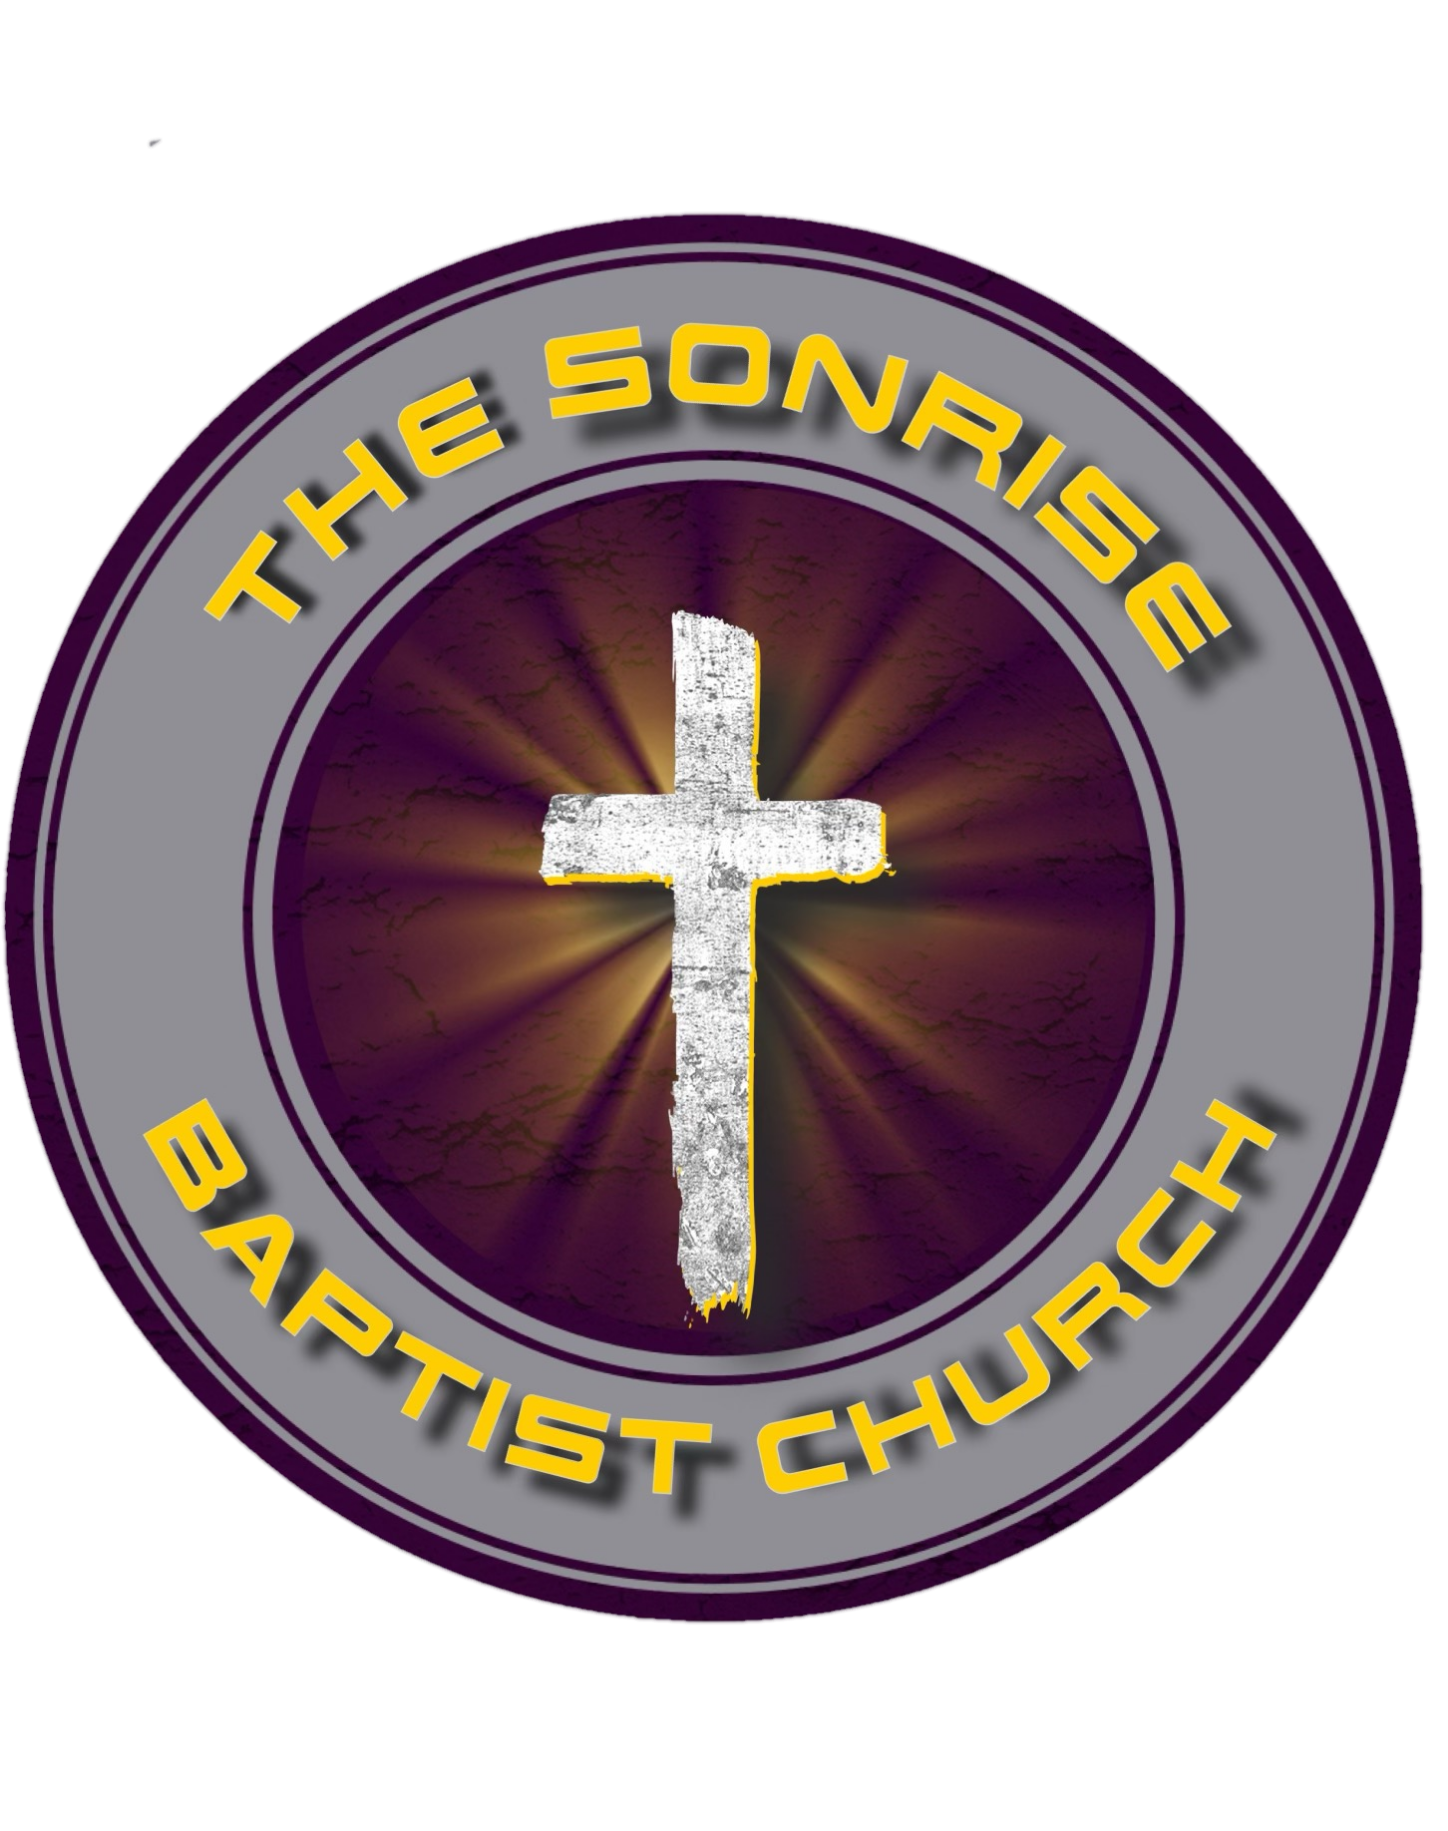 The Sonrise Baptist Church